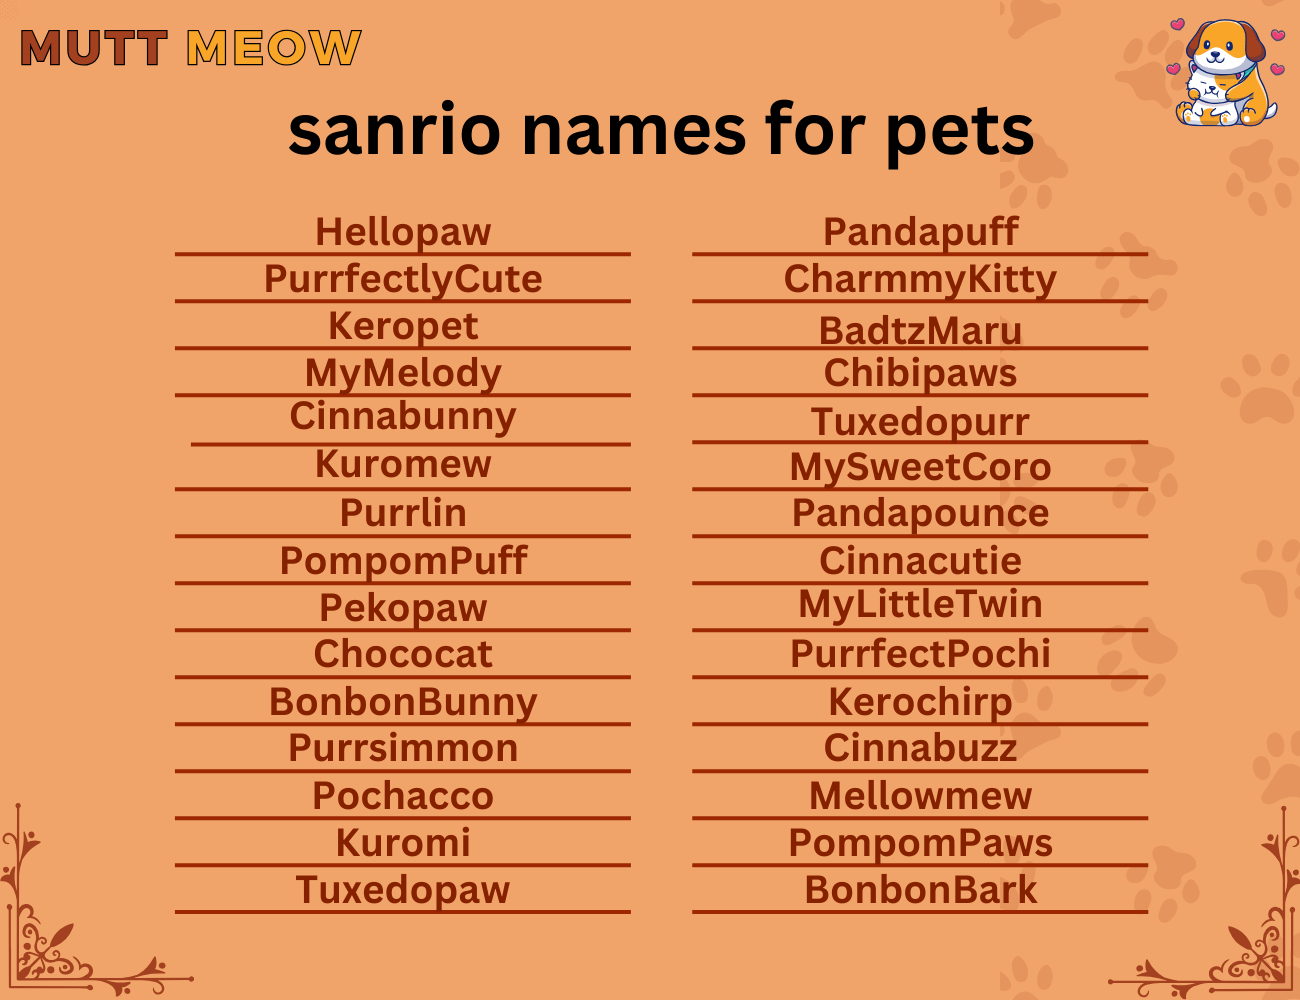 sanrio names for pets